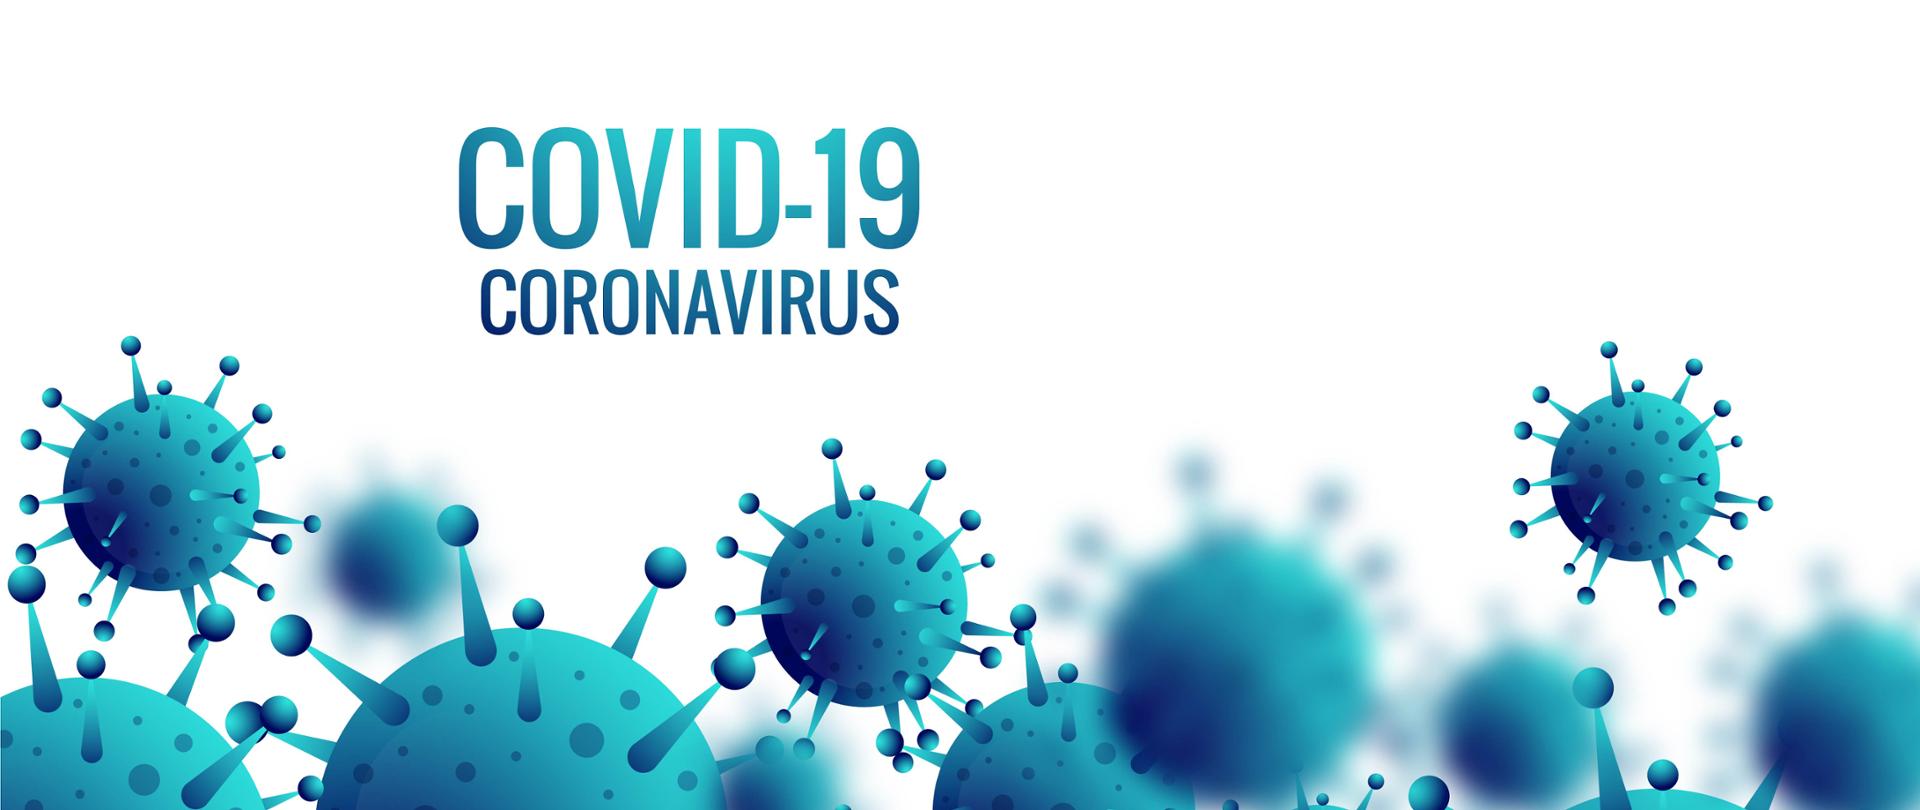  Coronavirus microbe cells in infected covid-19 banner design